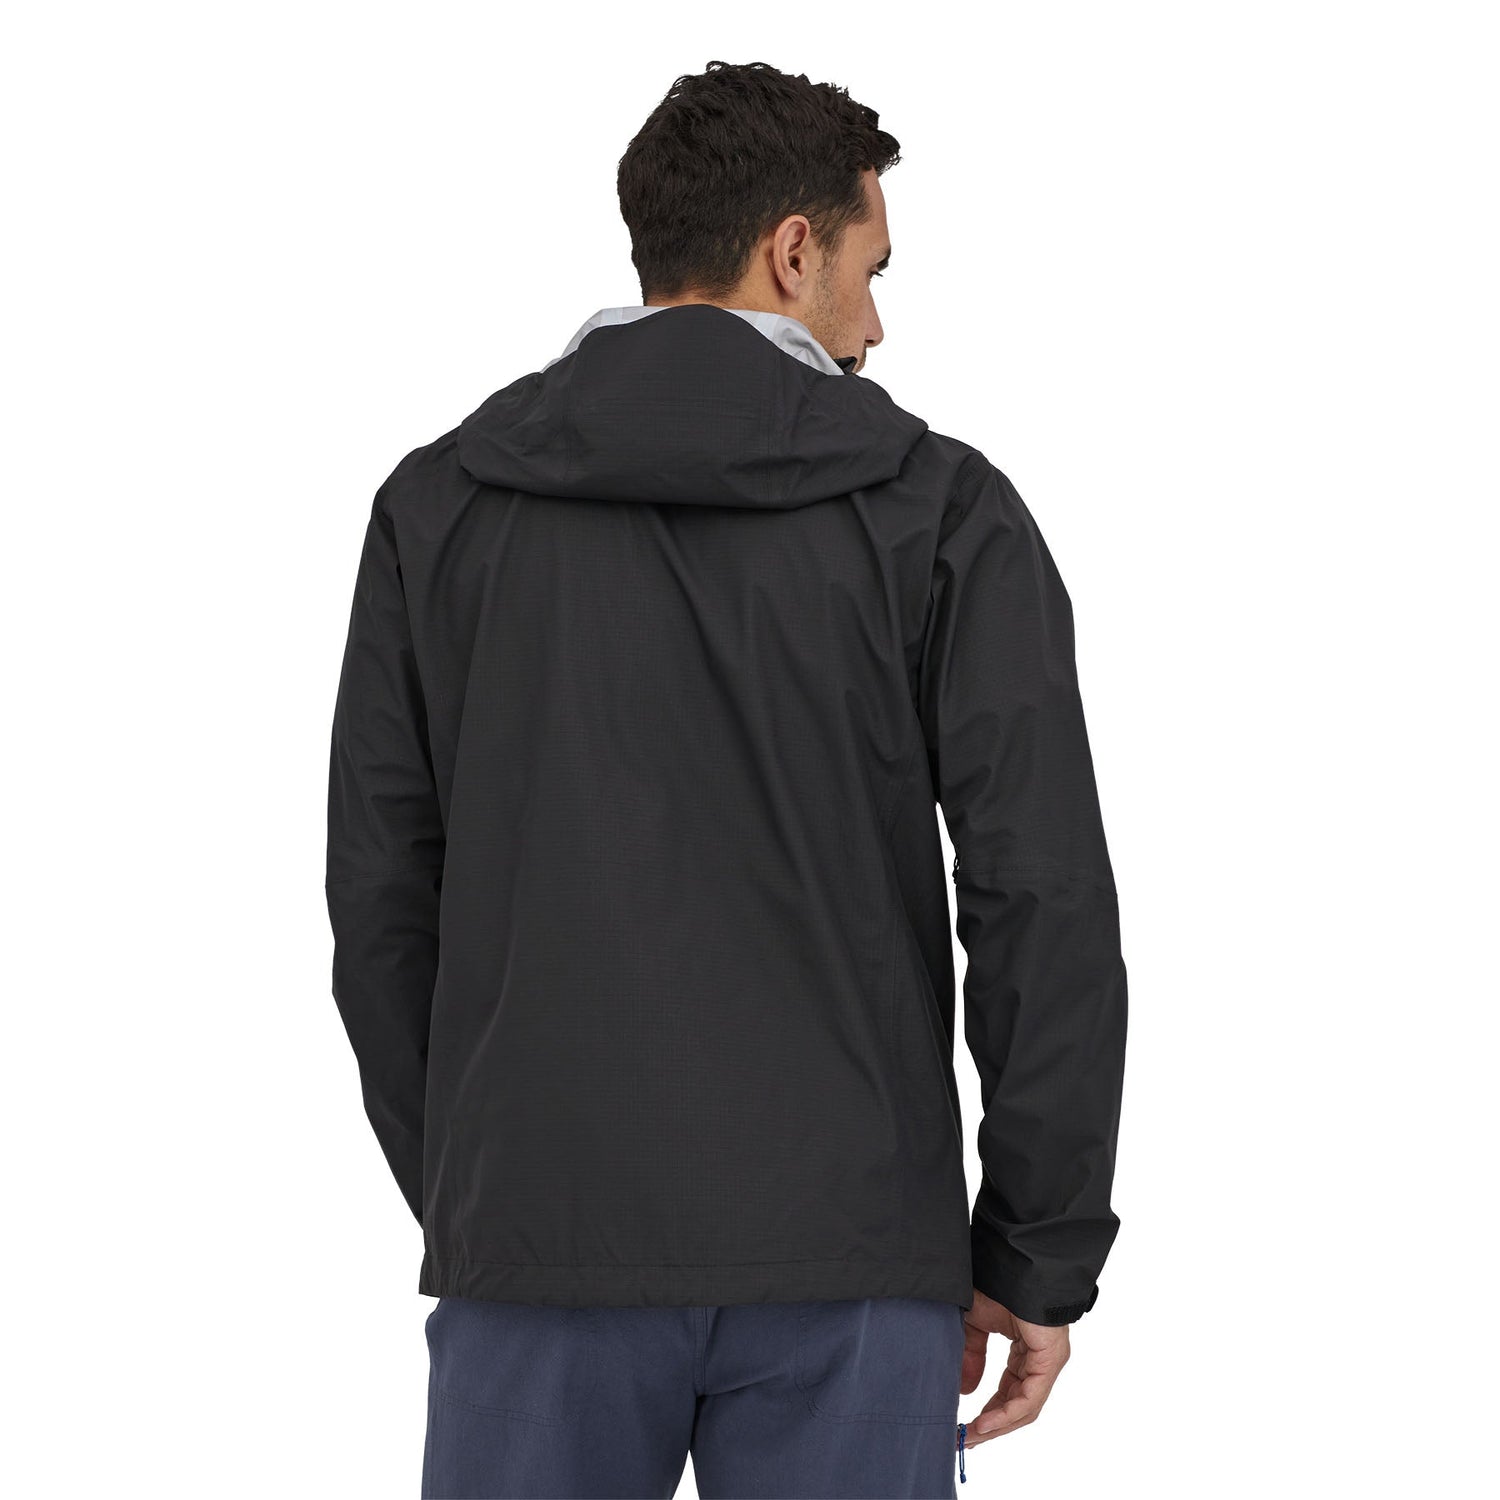 Patagonia M's Granite Crest Shell Jacket - 100% Recycled Nylon Black Jacket